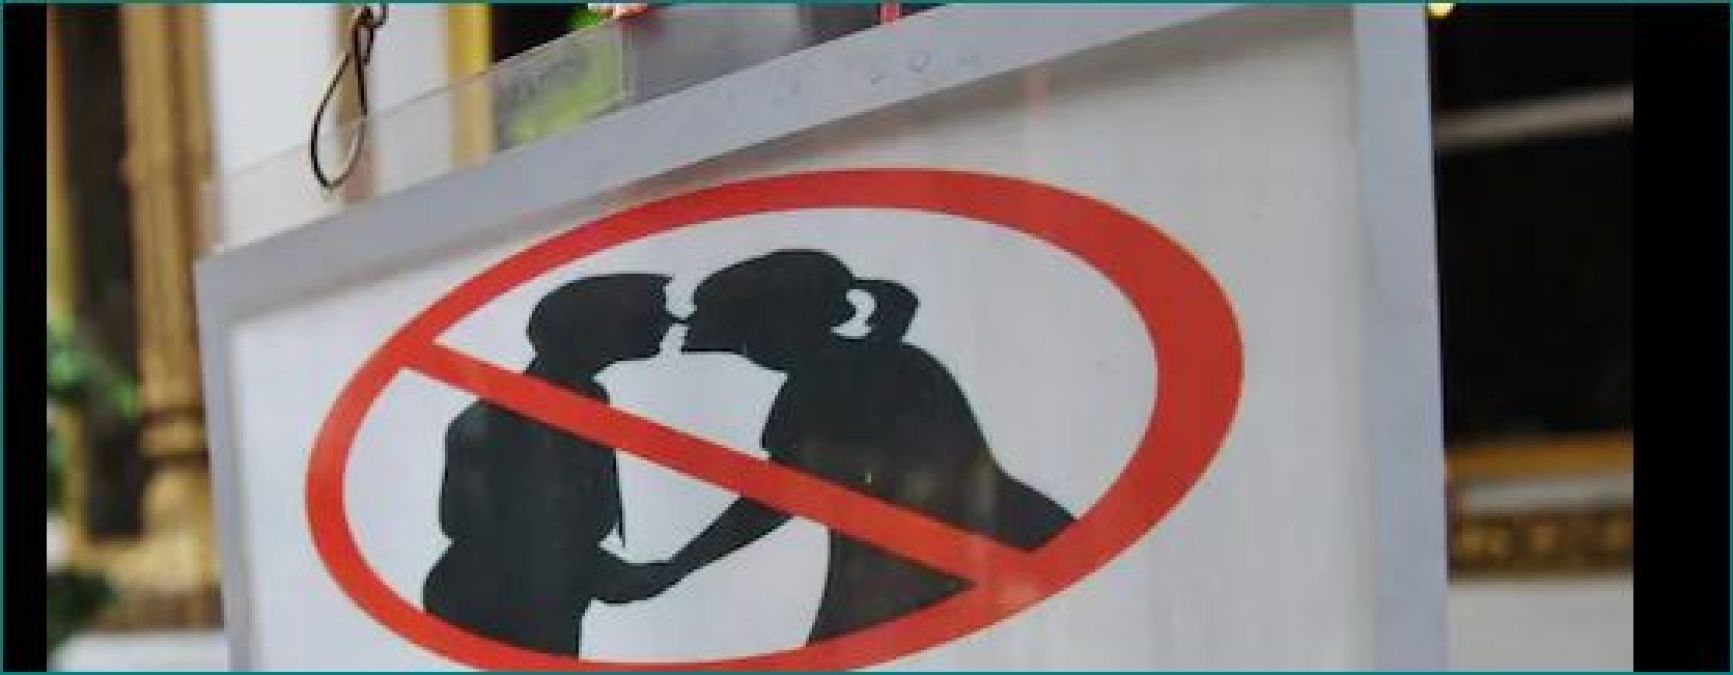 Mumbai society upset by love birds' antics, sets up this signboard